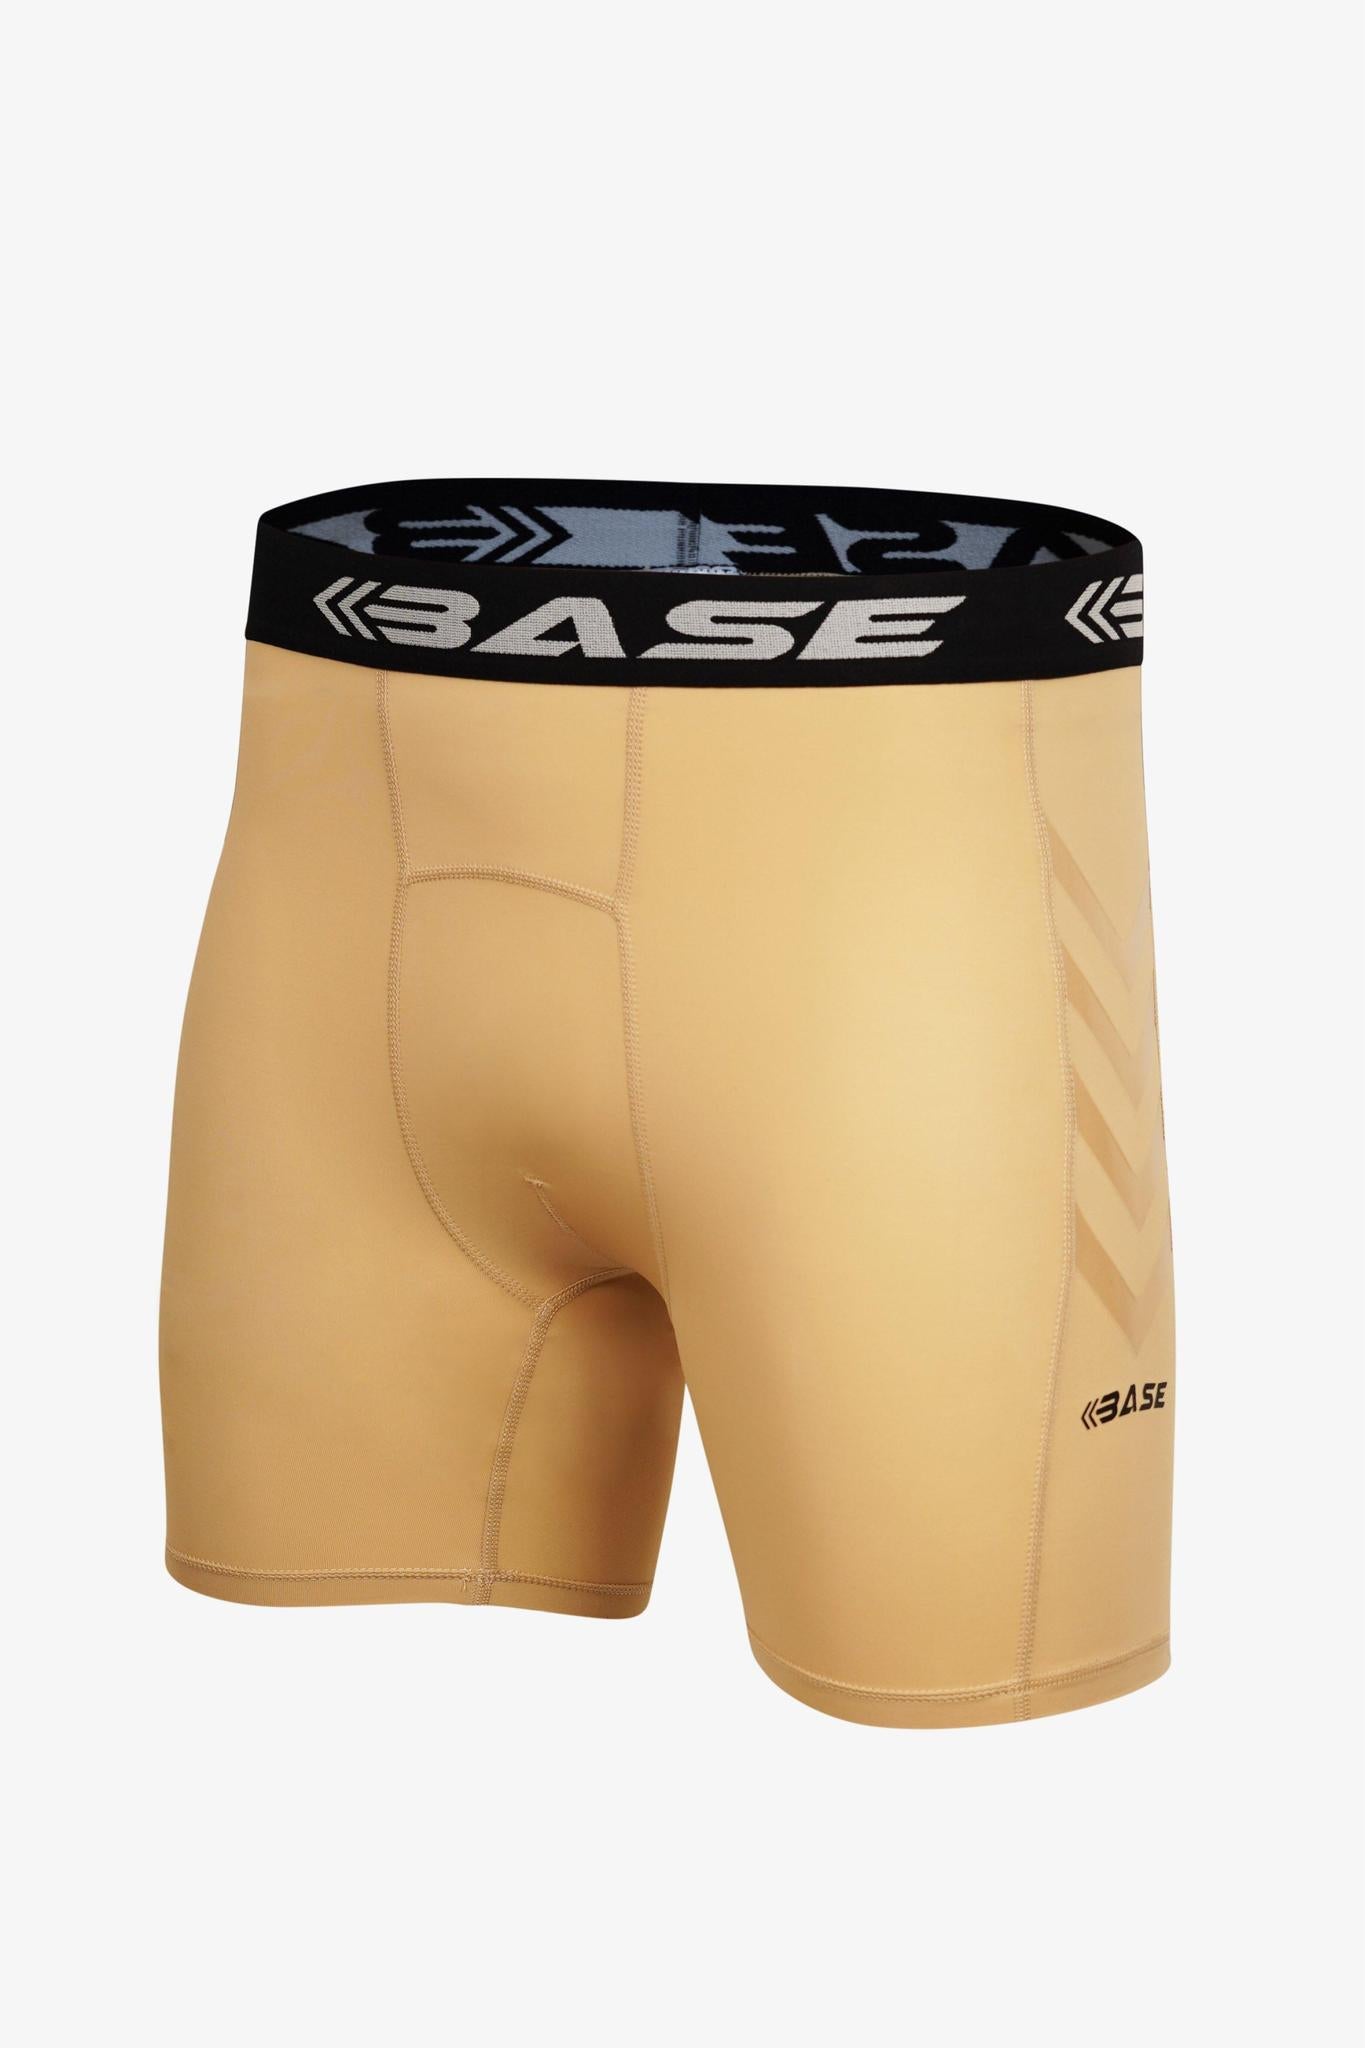 BASE Men's Compression Shorts - Nude - Adelaide 36ers